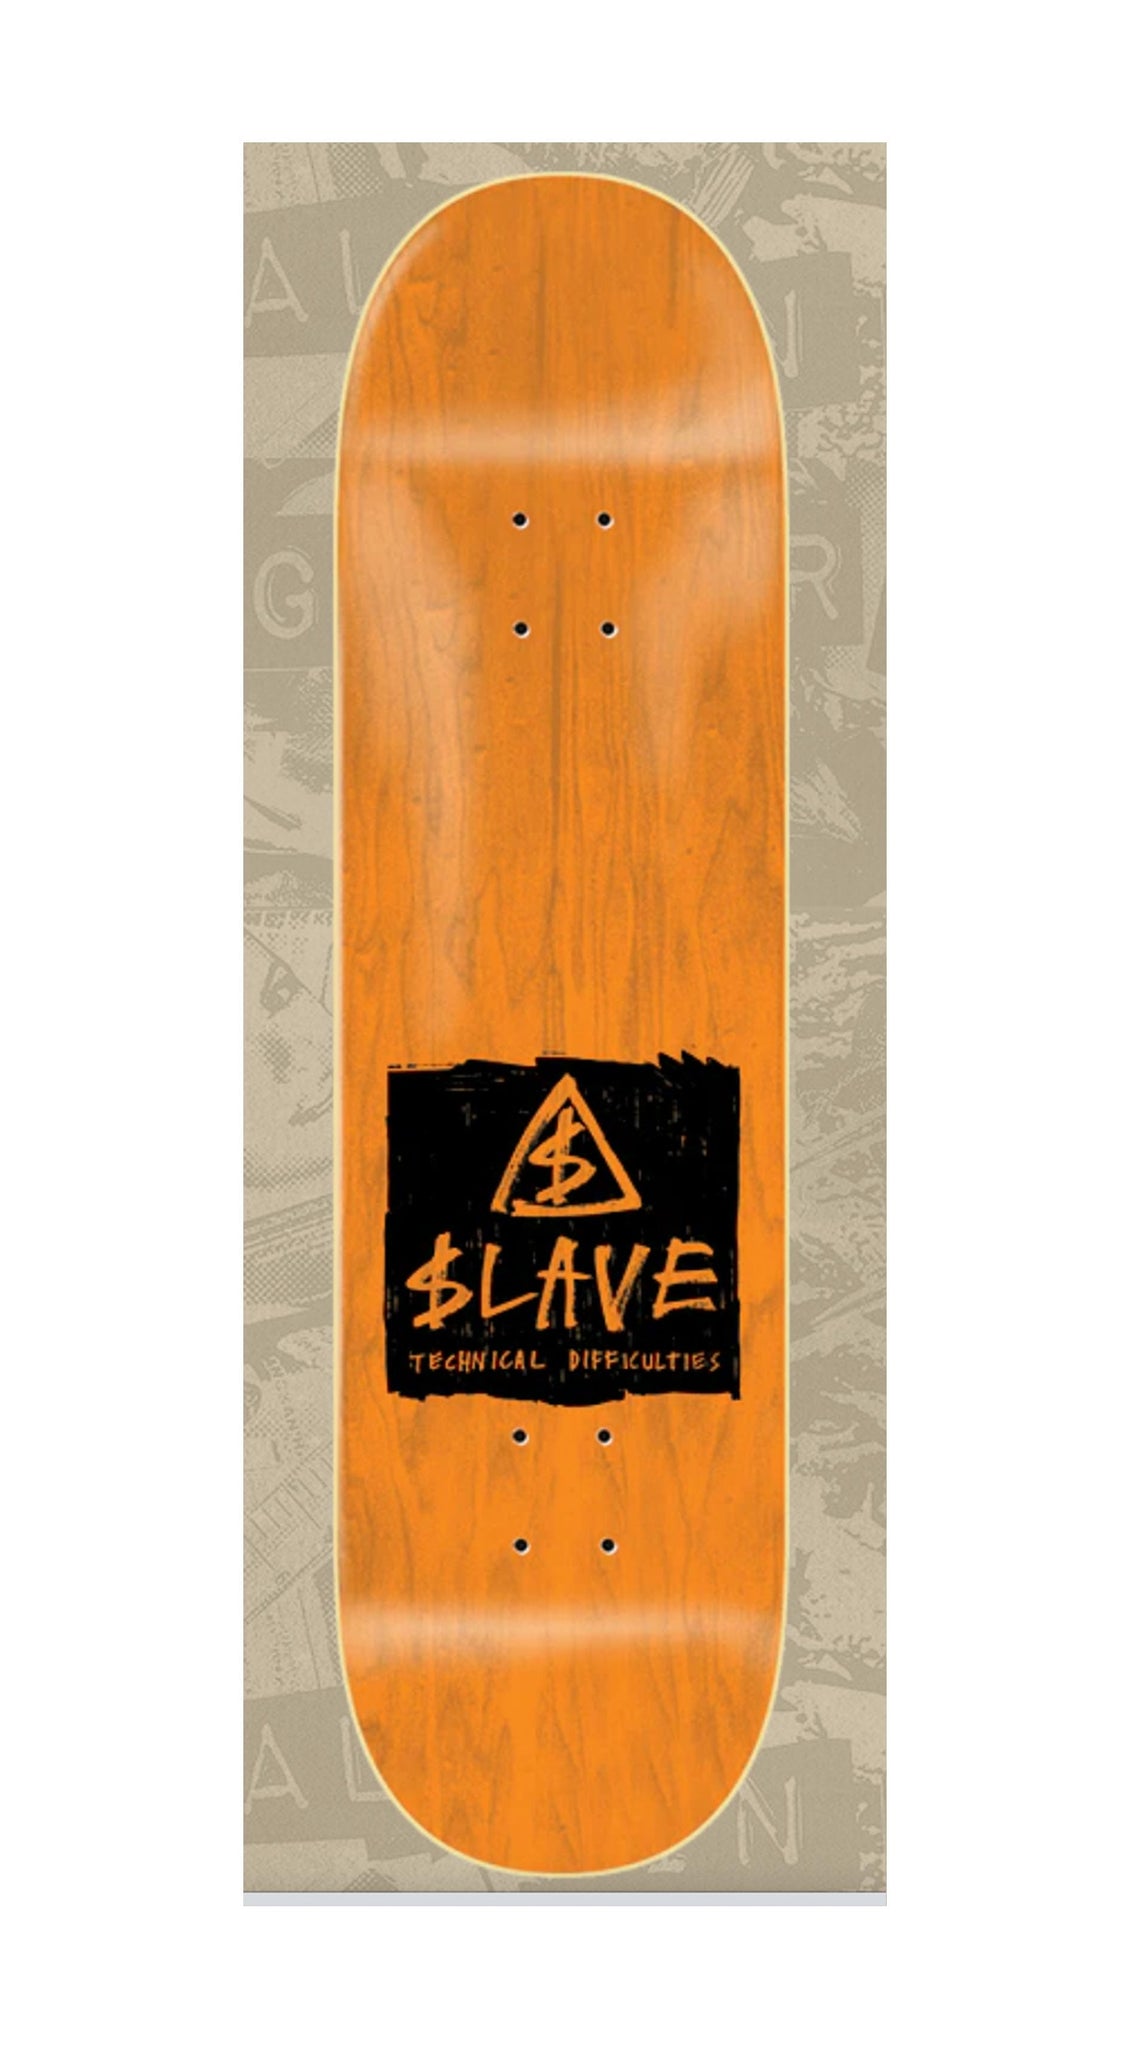 Slave SHULTZ - TECHNICAL DIFFICULTIES 8.5 Skateboard Deck - Tabla Tablas Slave 